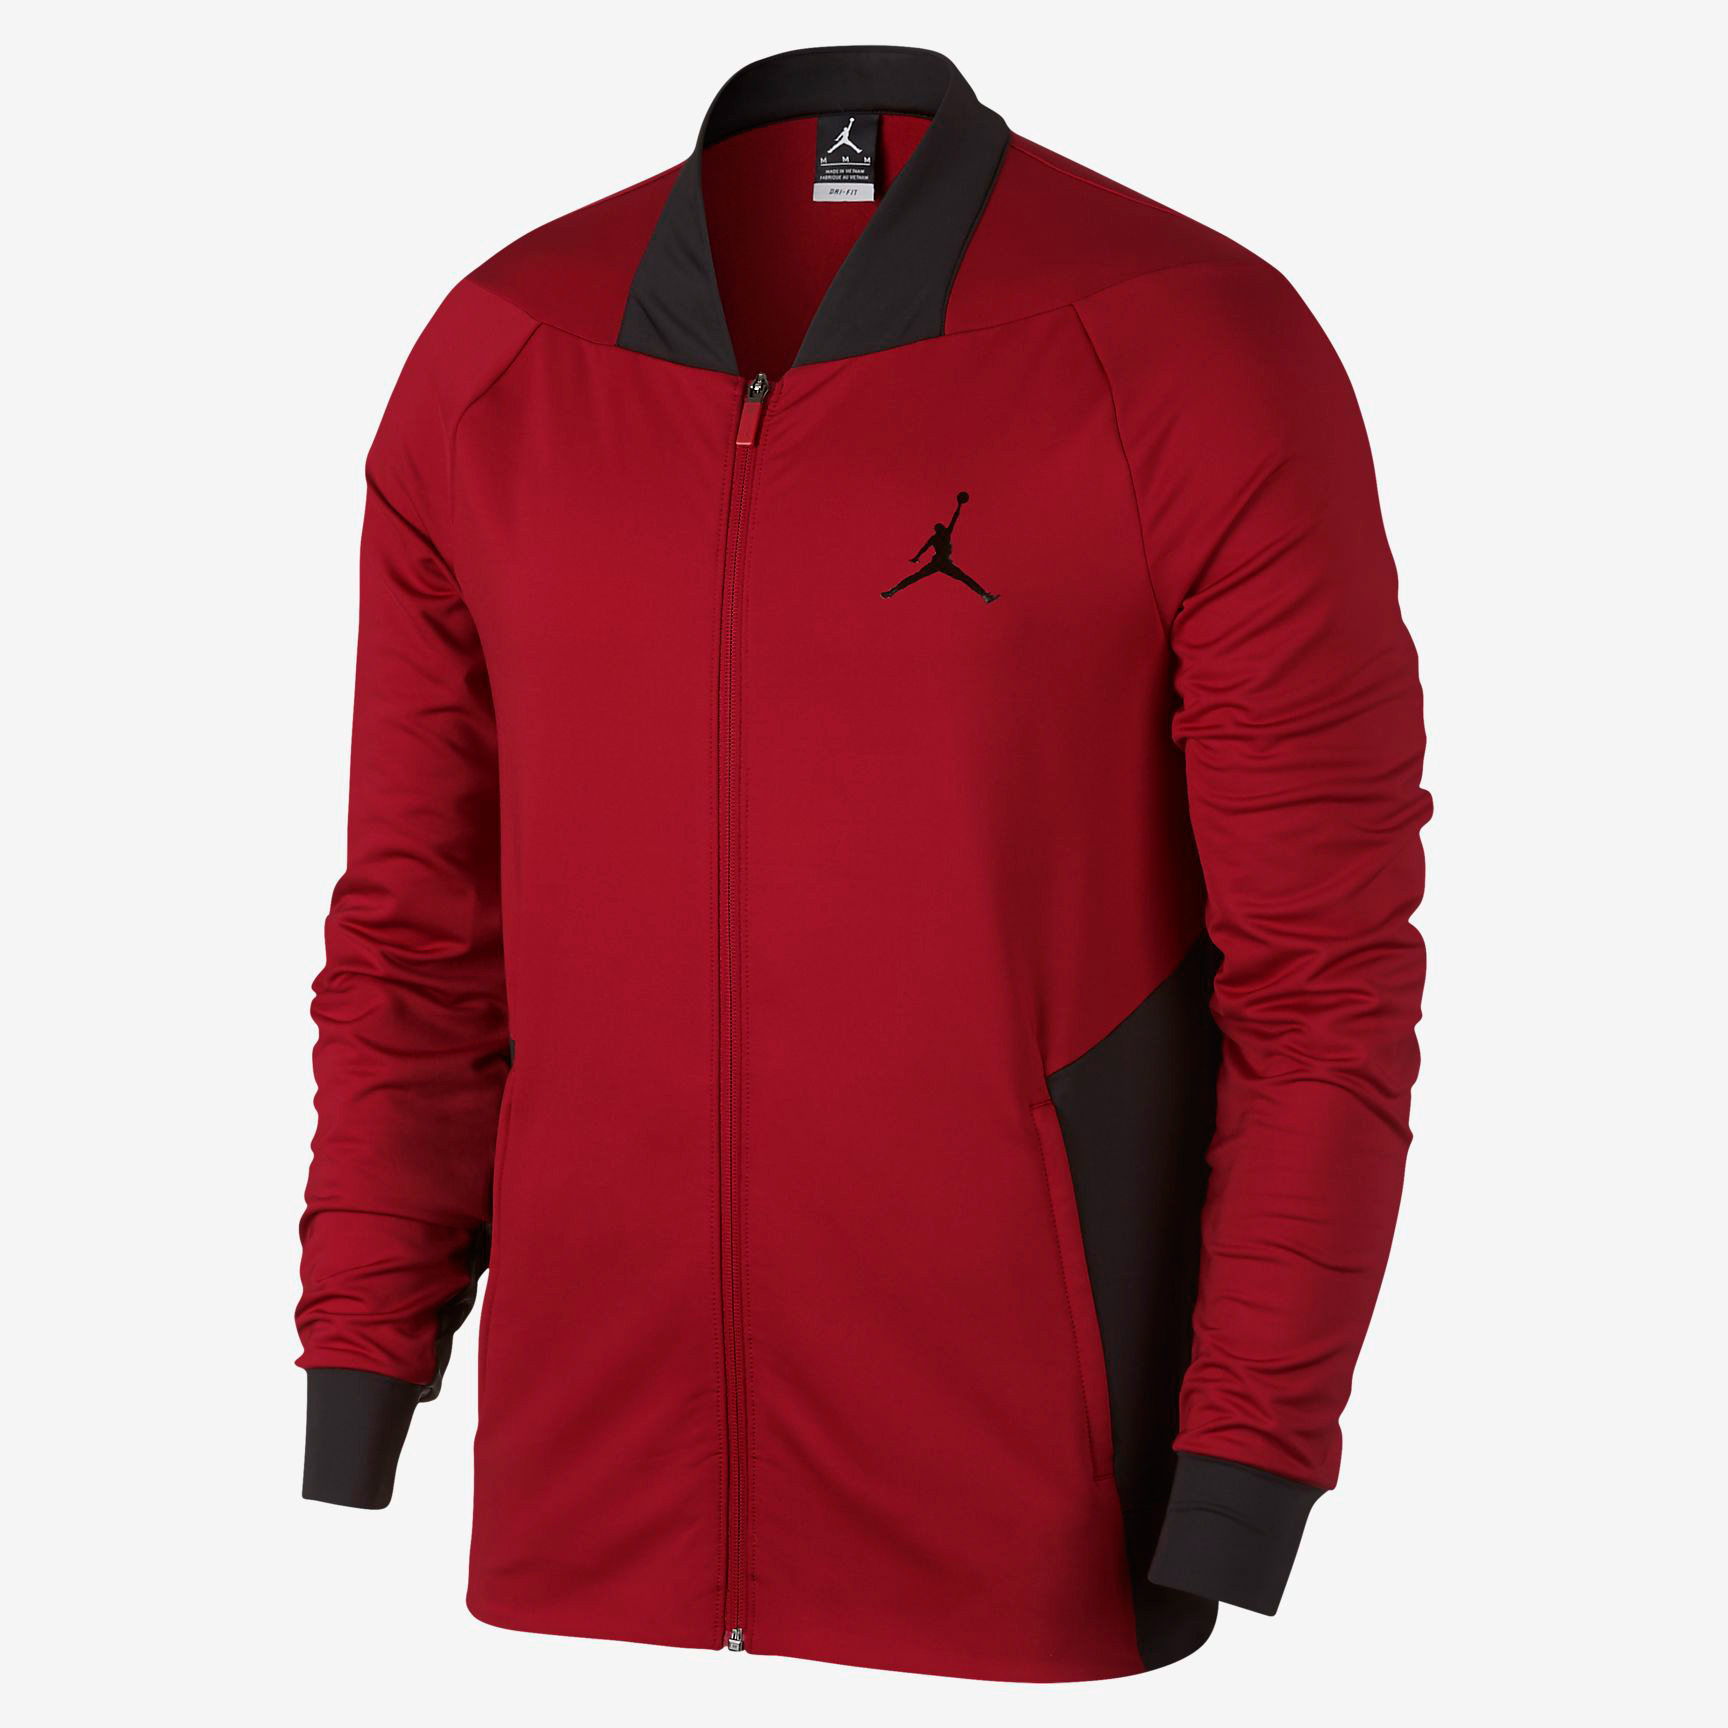 Jordan Legacy 312 Varsity Red Clothing Match | SneakerFits.com